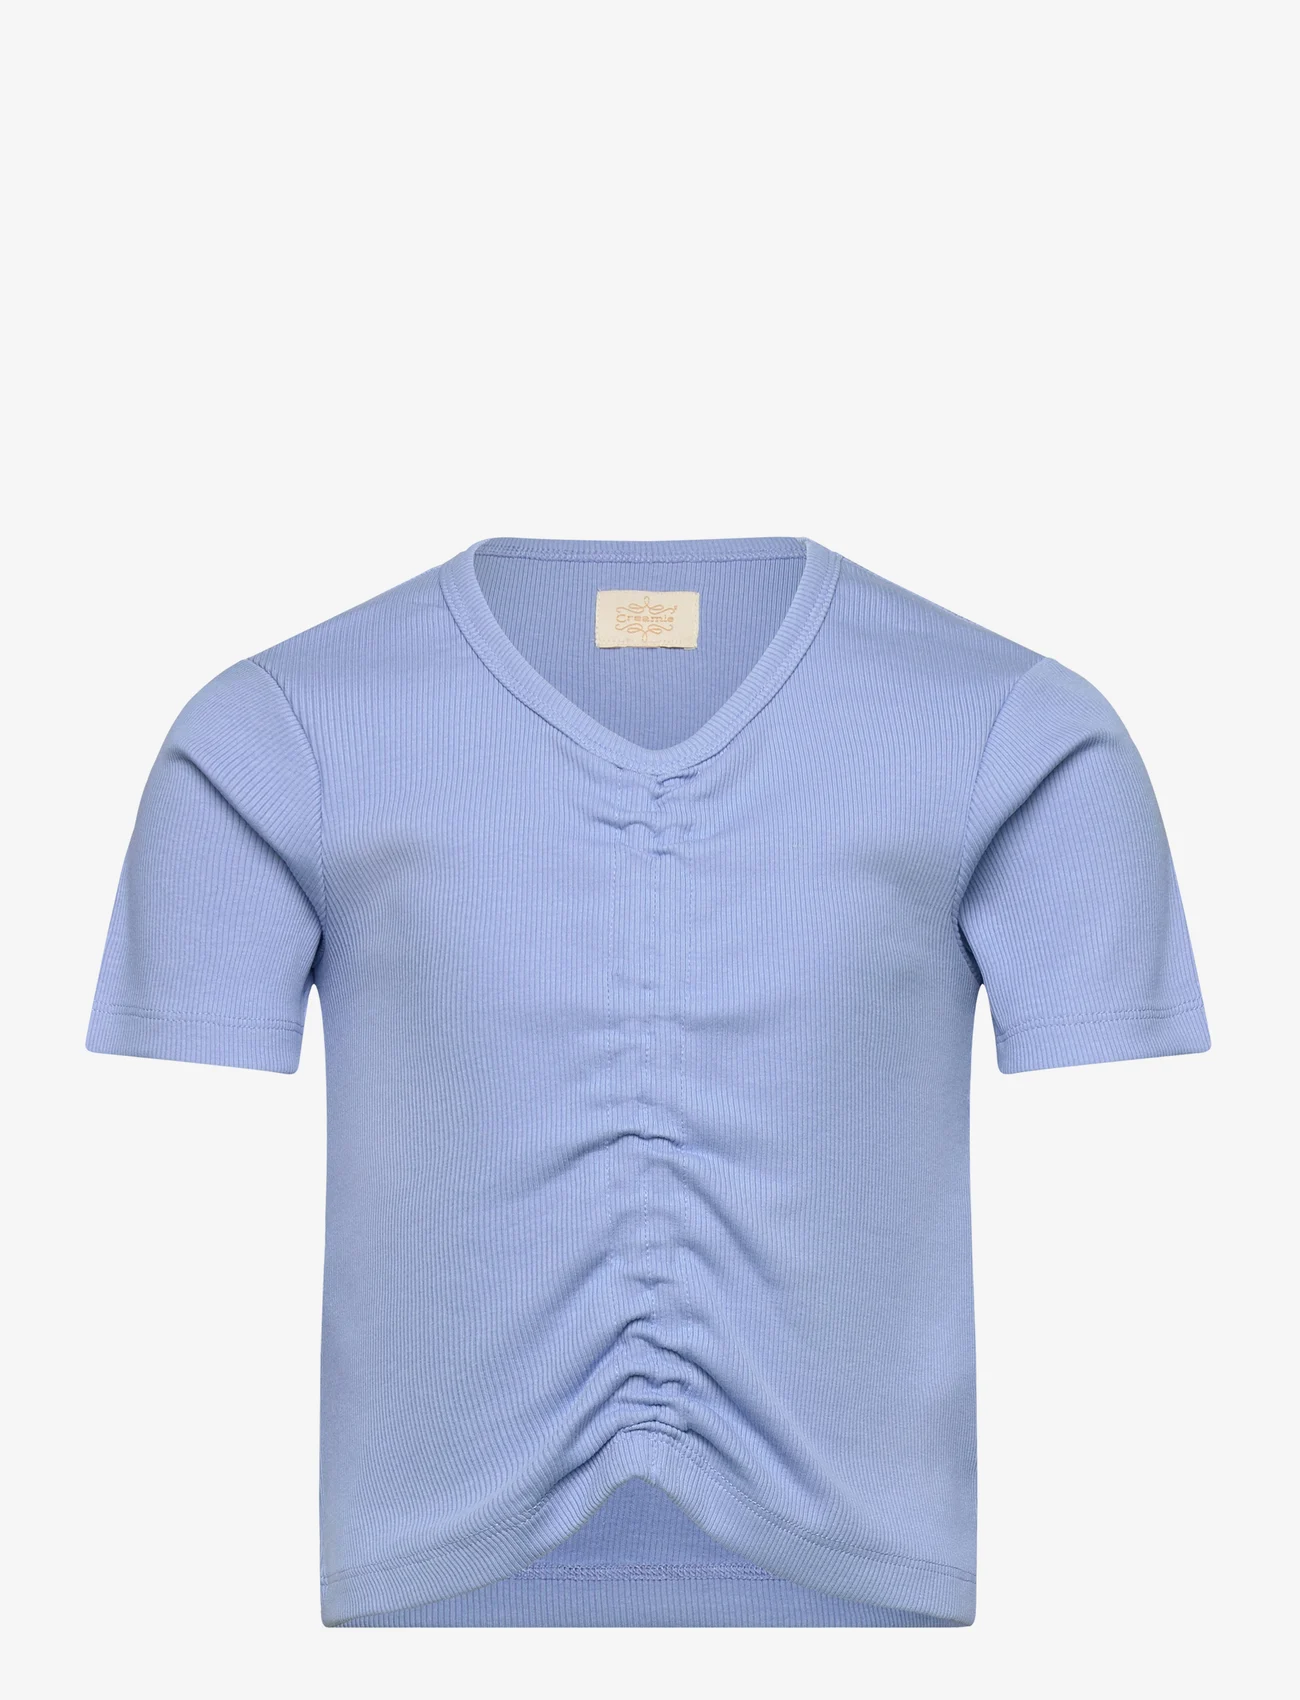 Creamie - T-shirt SS Rib - kortermede - bel air blue - 0